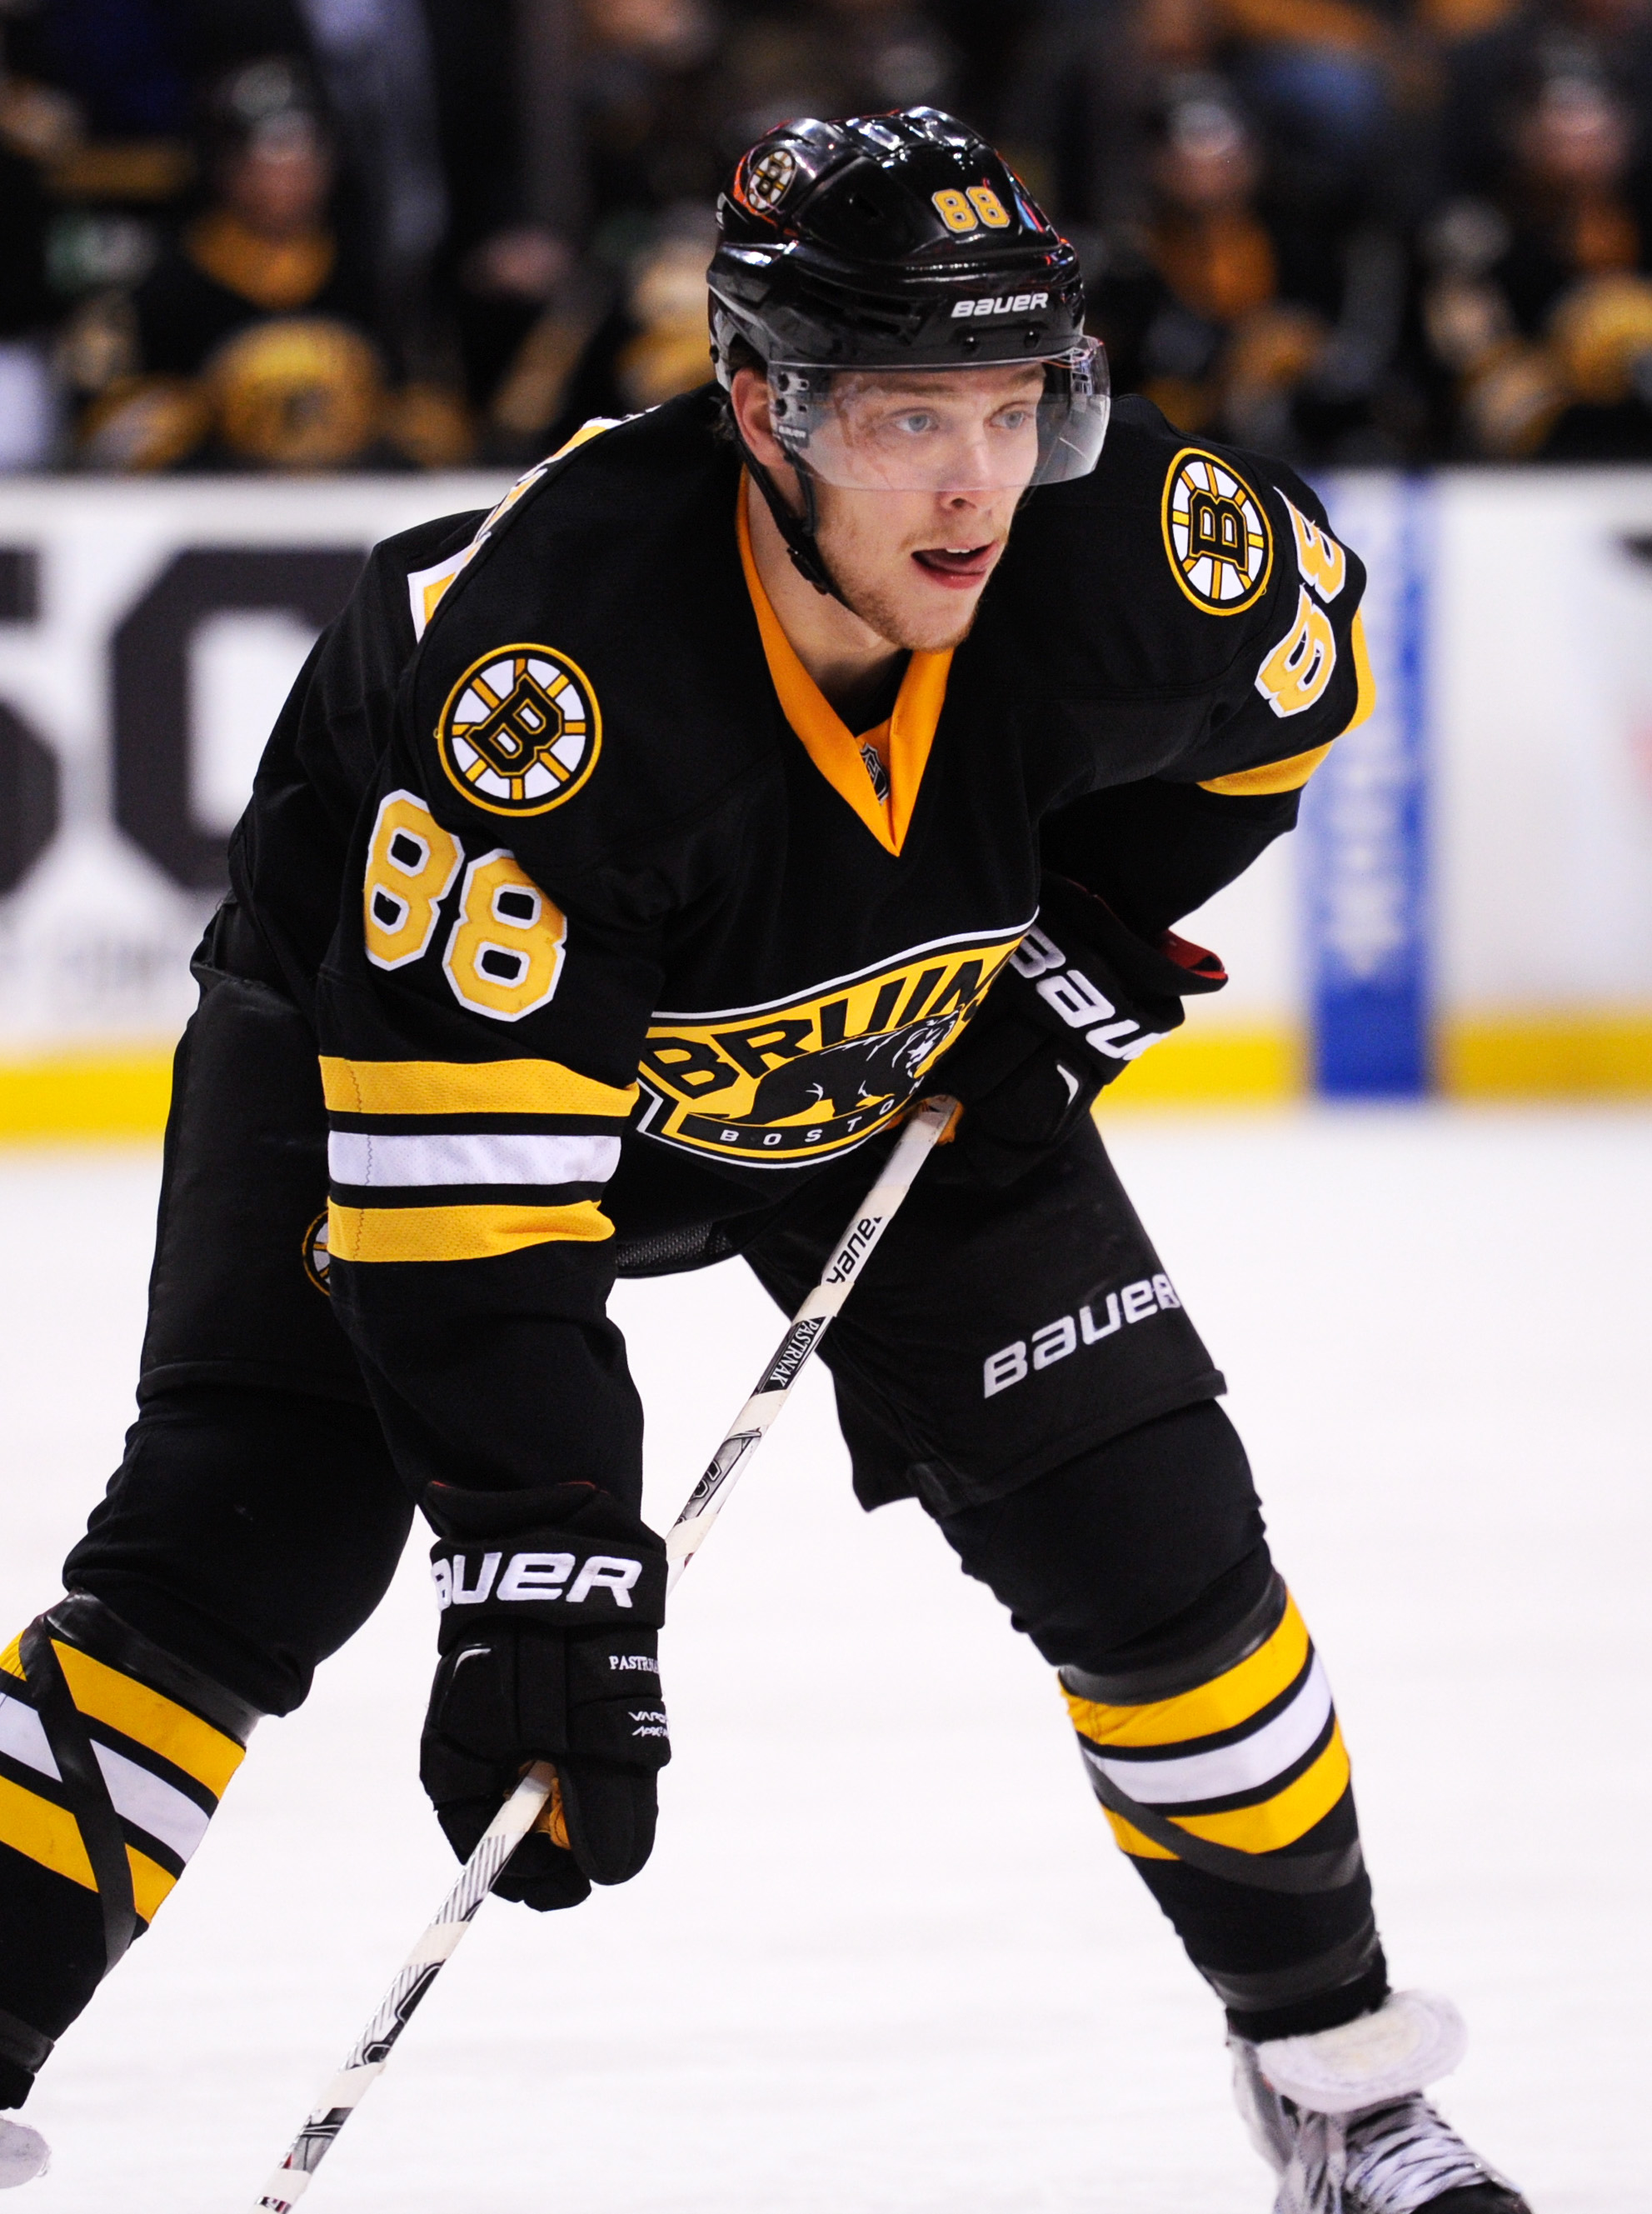 Report: Bruins, Pastrnak make progress in extension talks